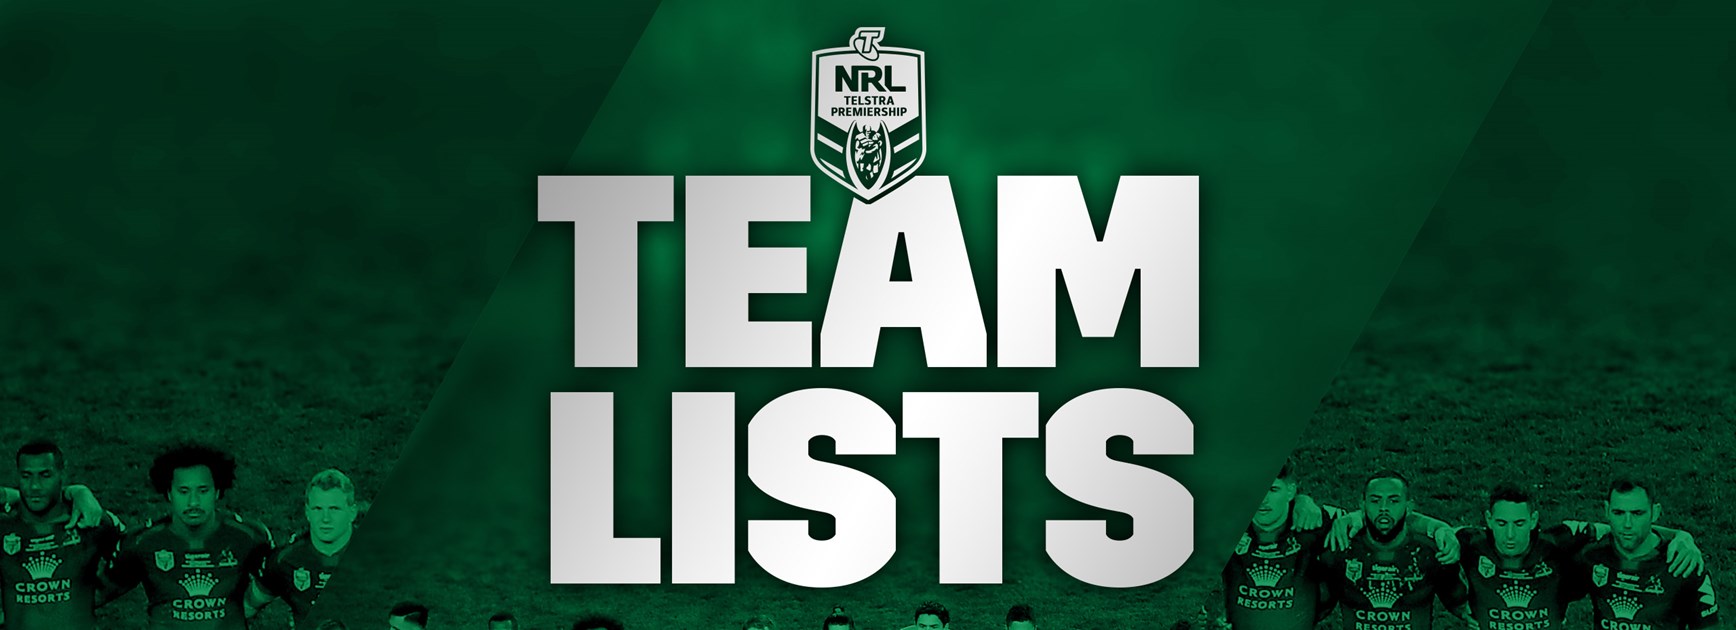 Round 11 NRL team lists